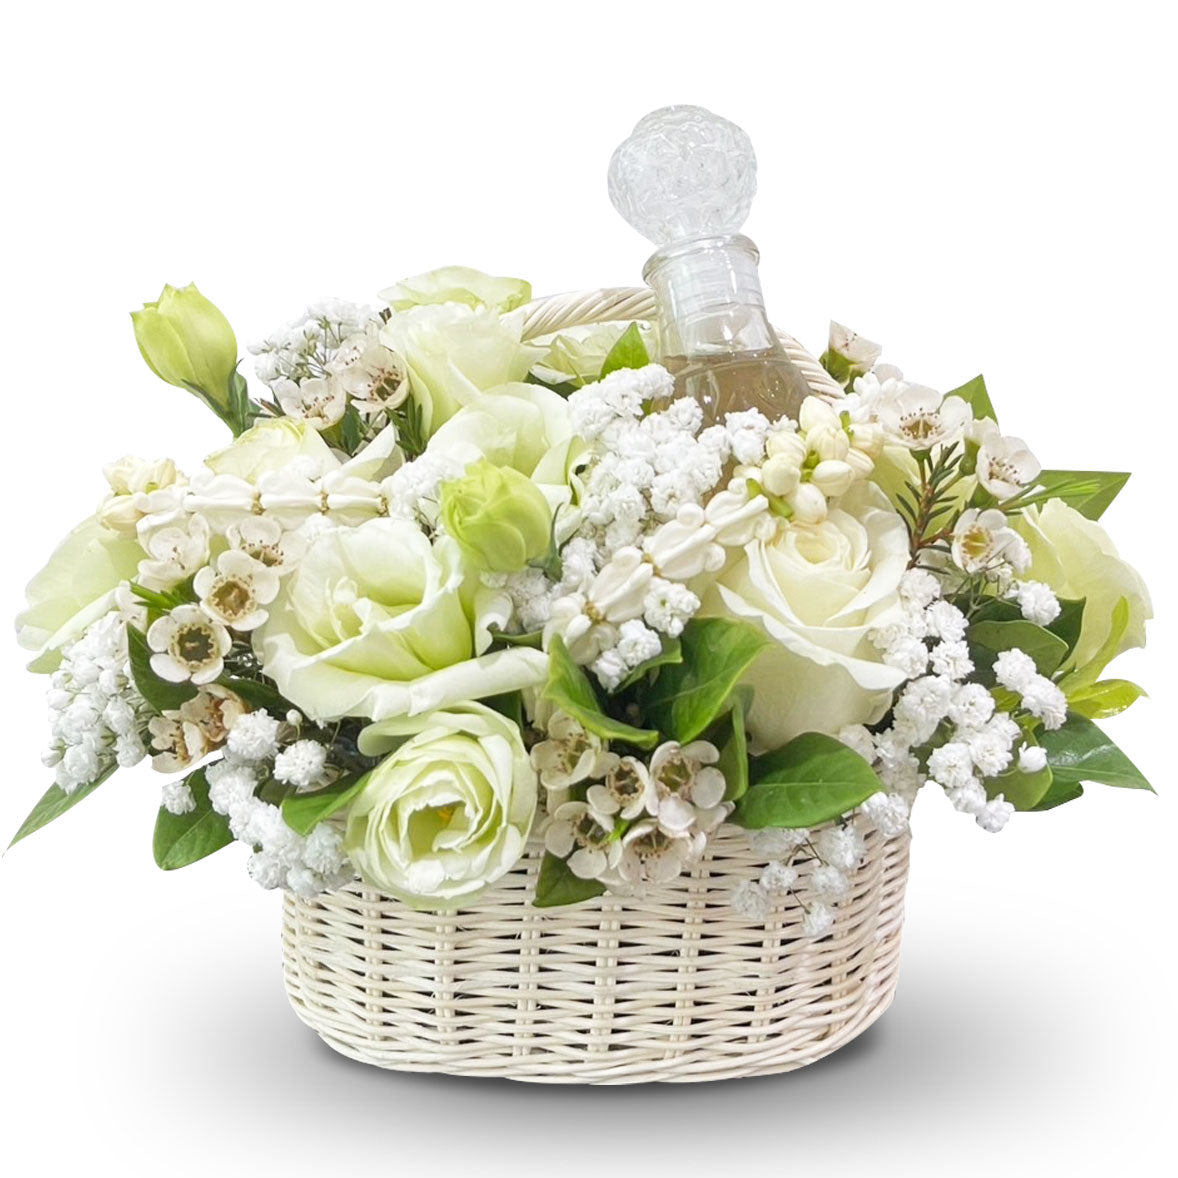 "Gratitude in Bloom" Basket of Flowers with Bottle of Scented Water กระเช้าน้ำอบ แด่คุณแม่ที่รัก